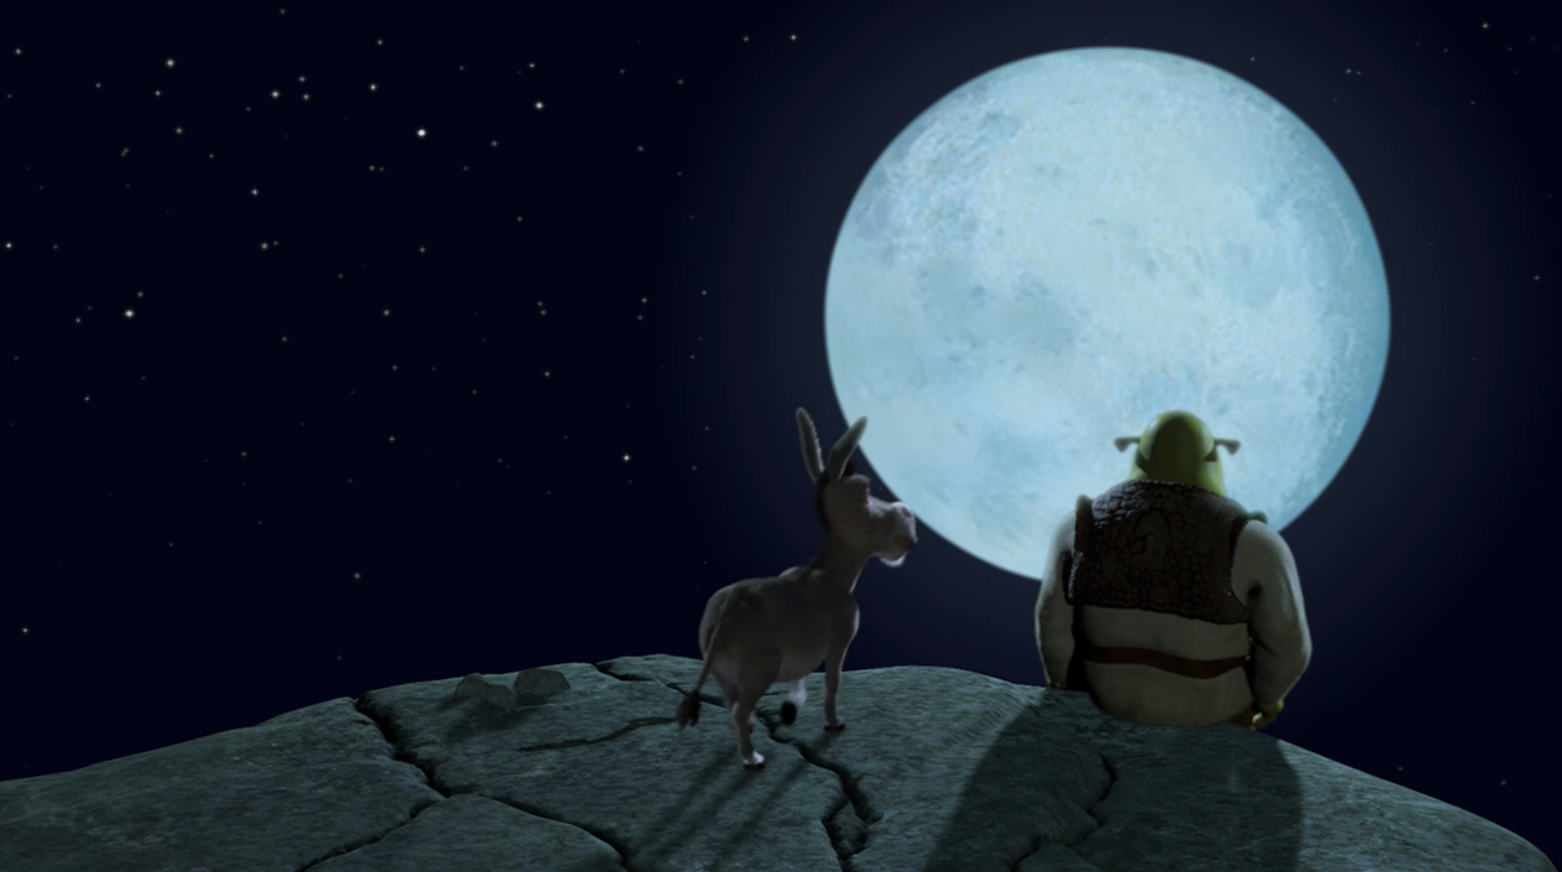 Shrek and Donkey looking at the moon